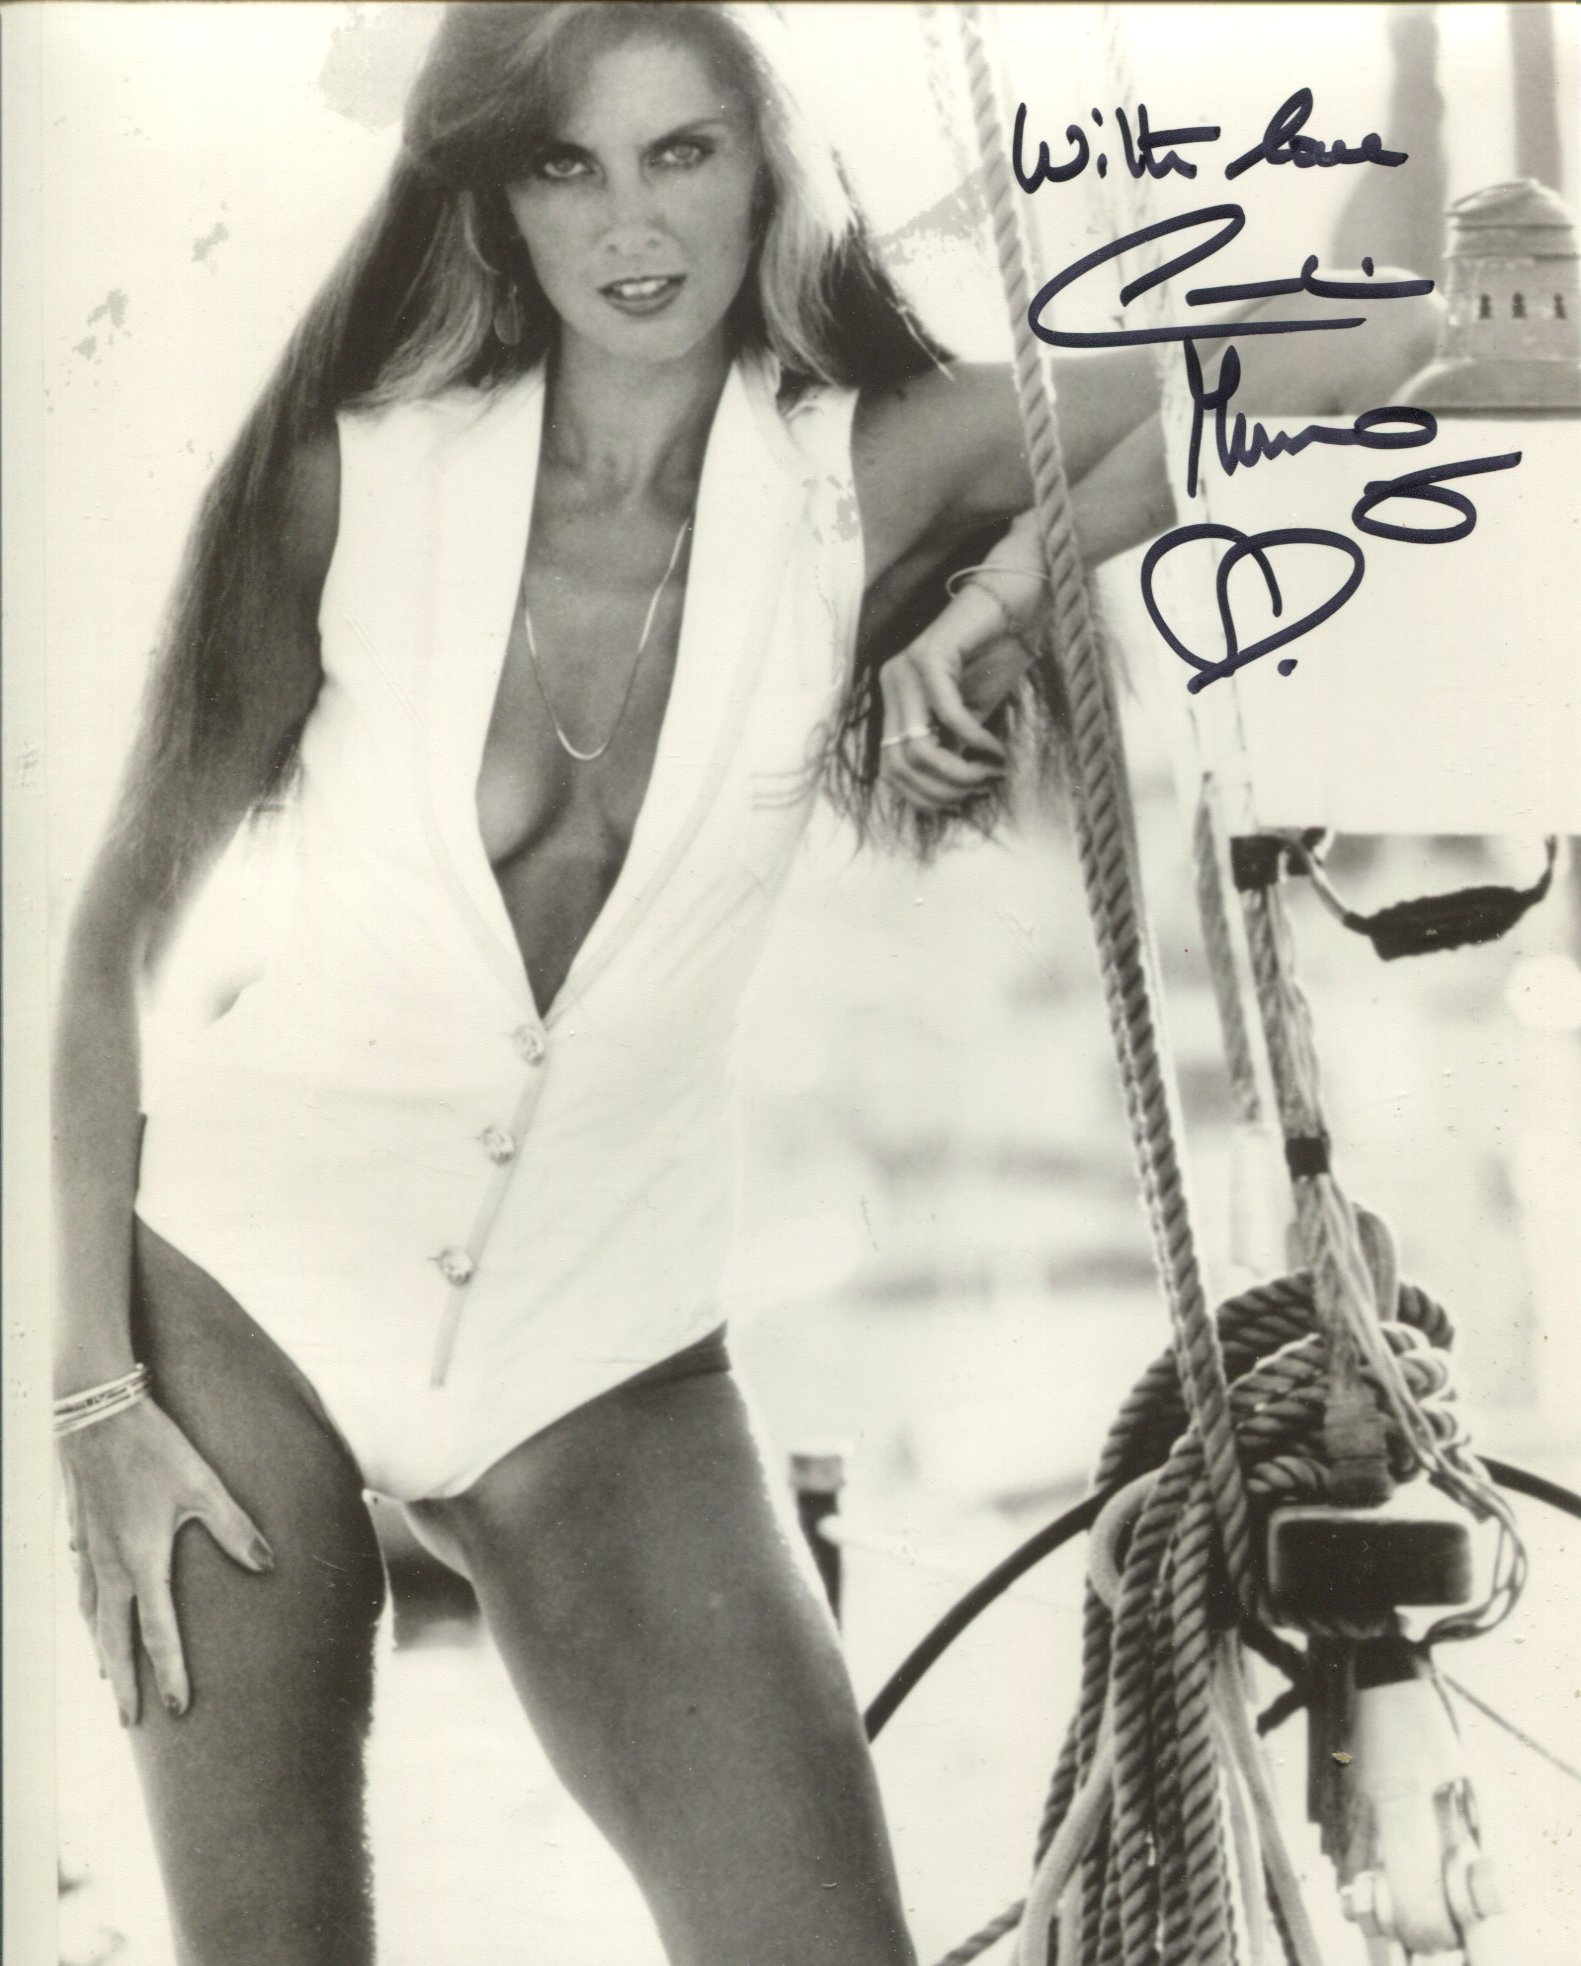 007 Bond actress Caroline Munro signed sexy pose 8x10 photo. Good Condition. All autographs come